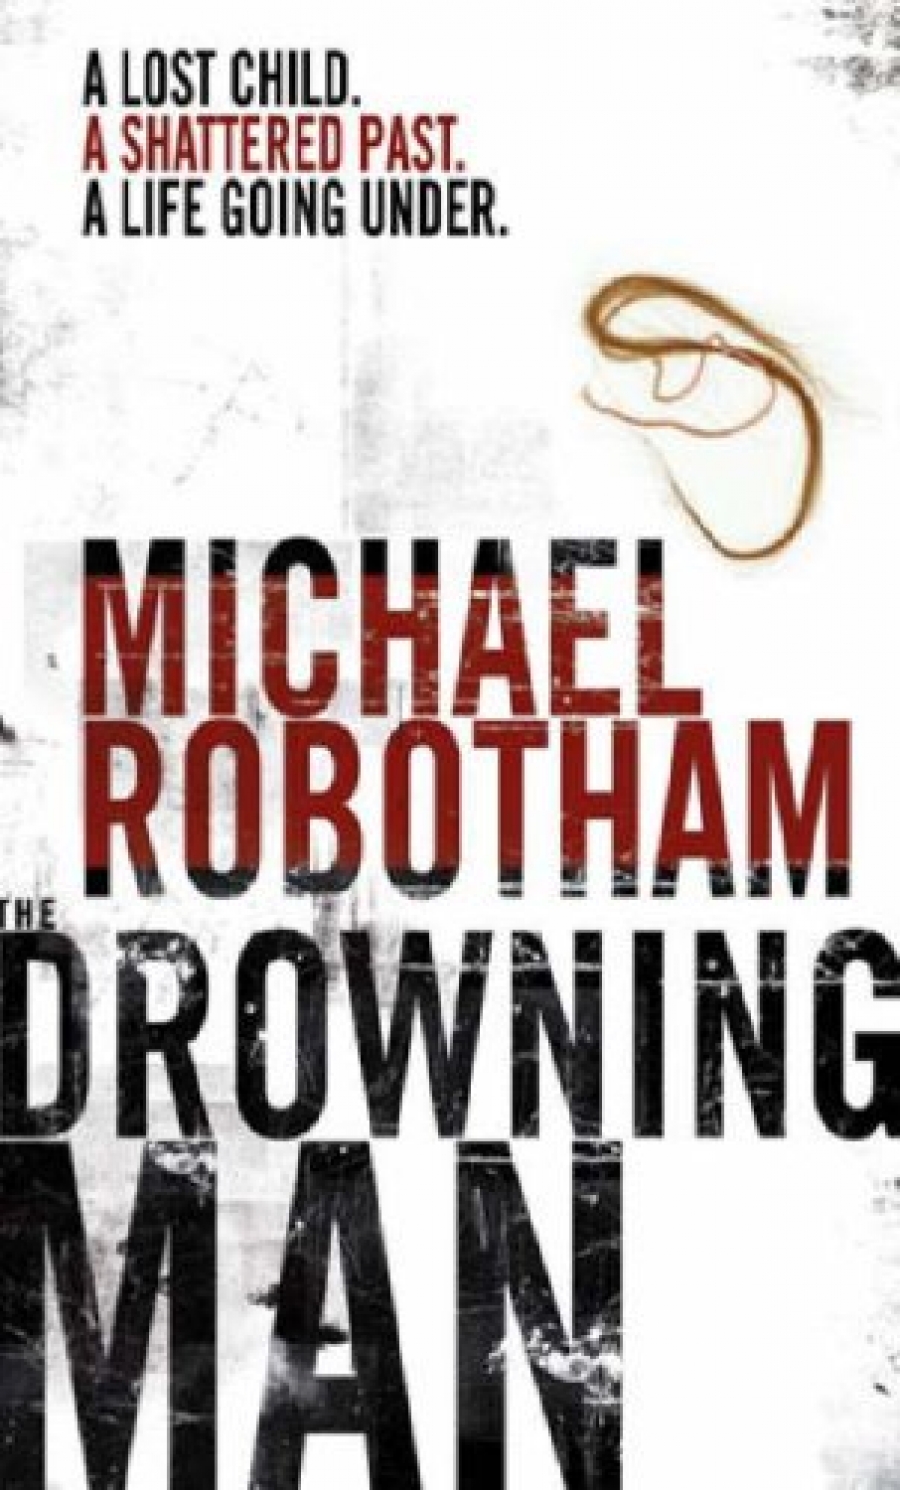 Robotham, Michael Drowning Man, the 